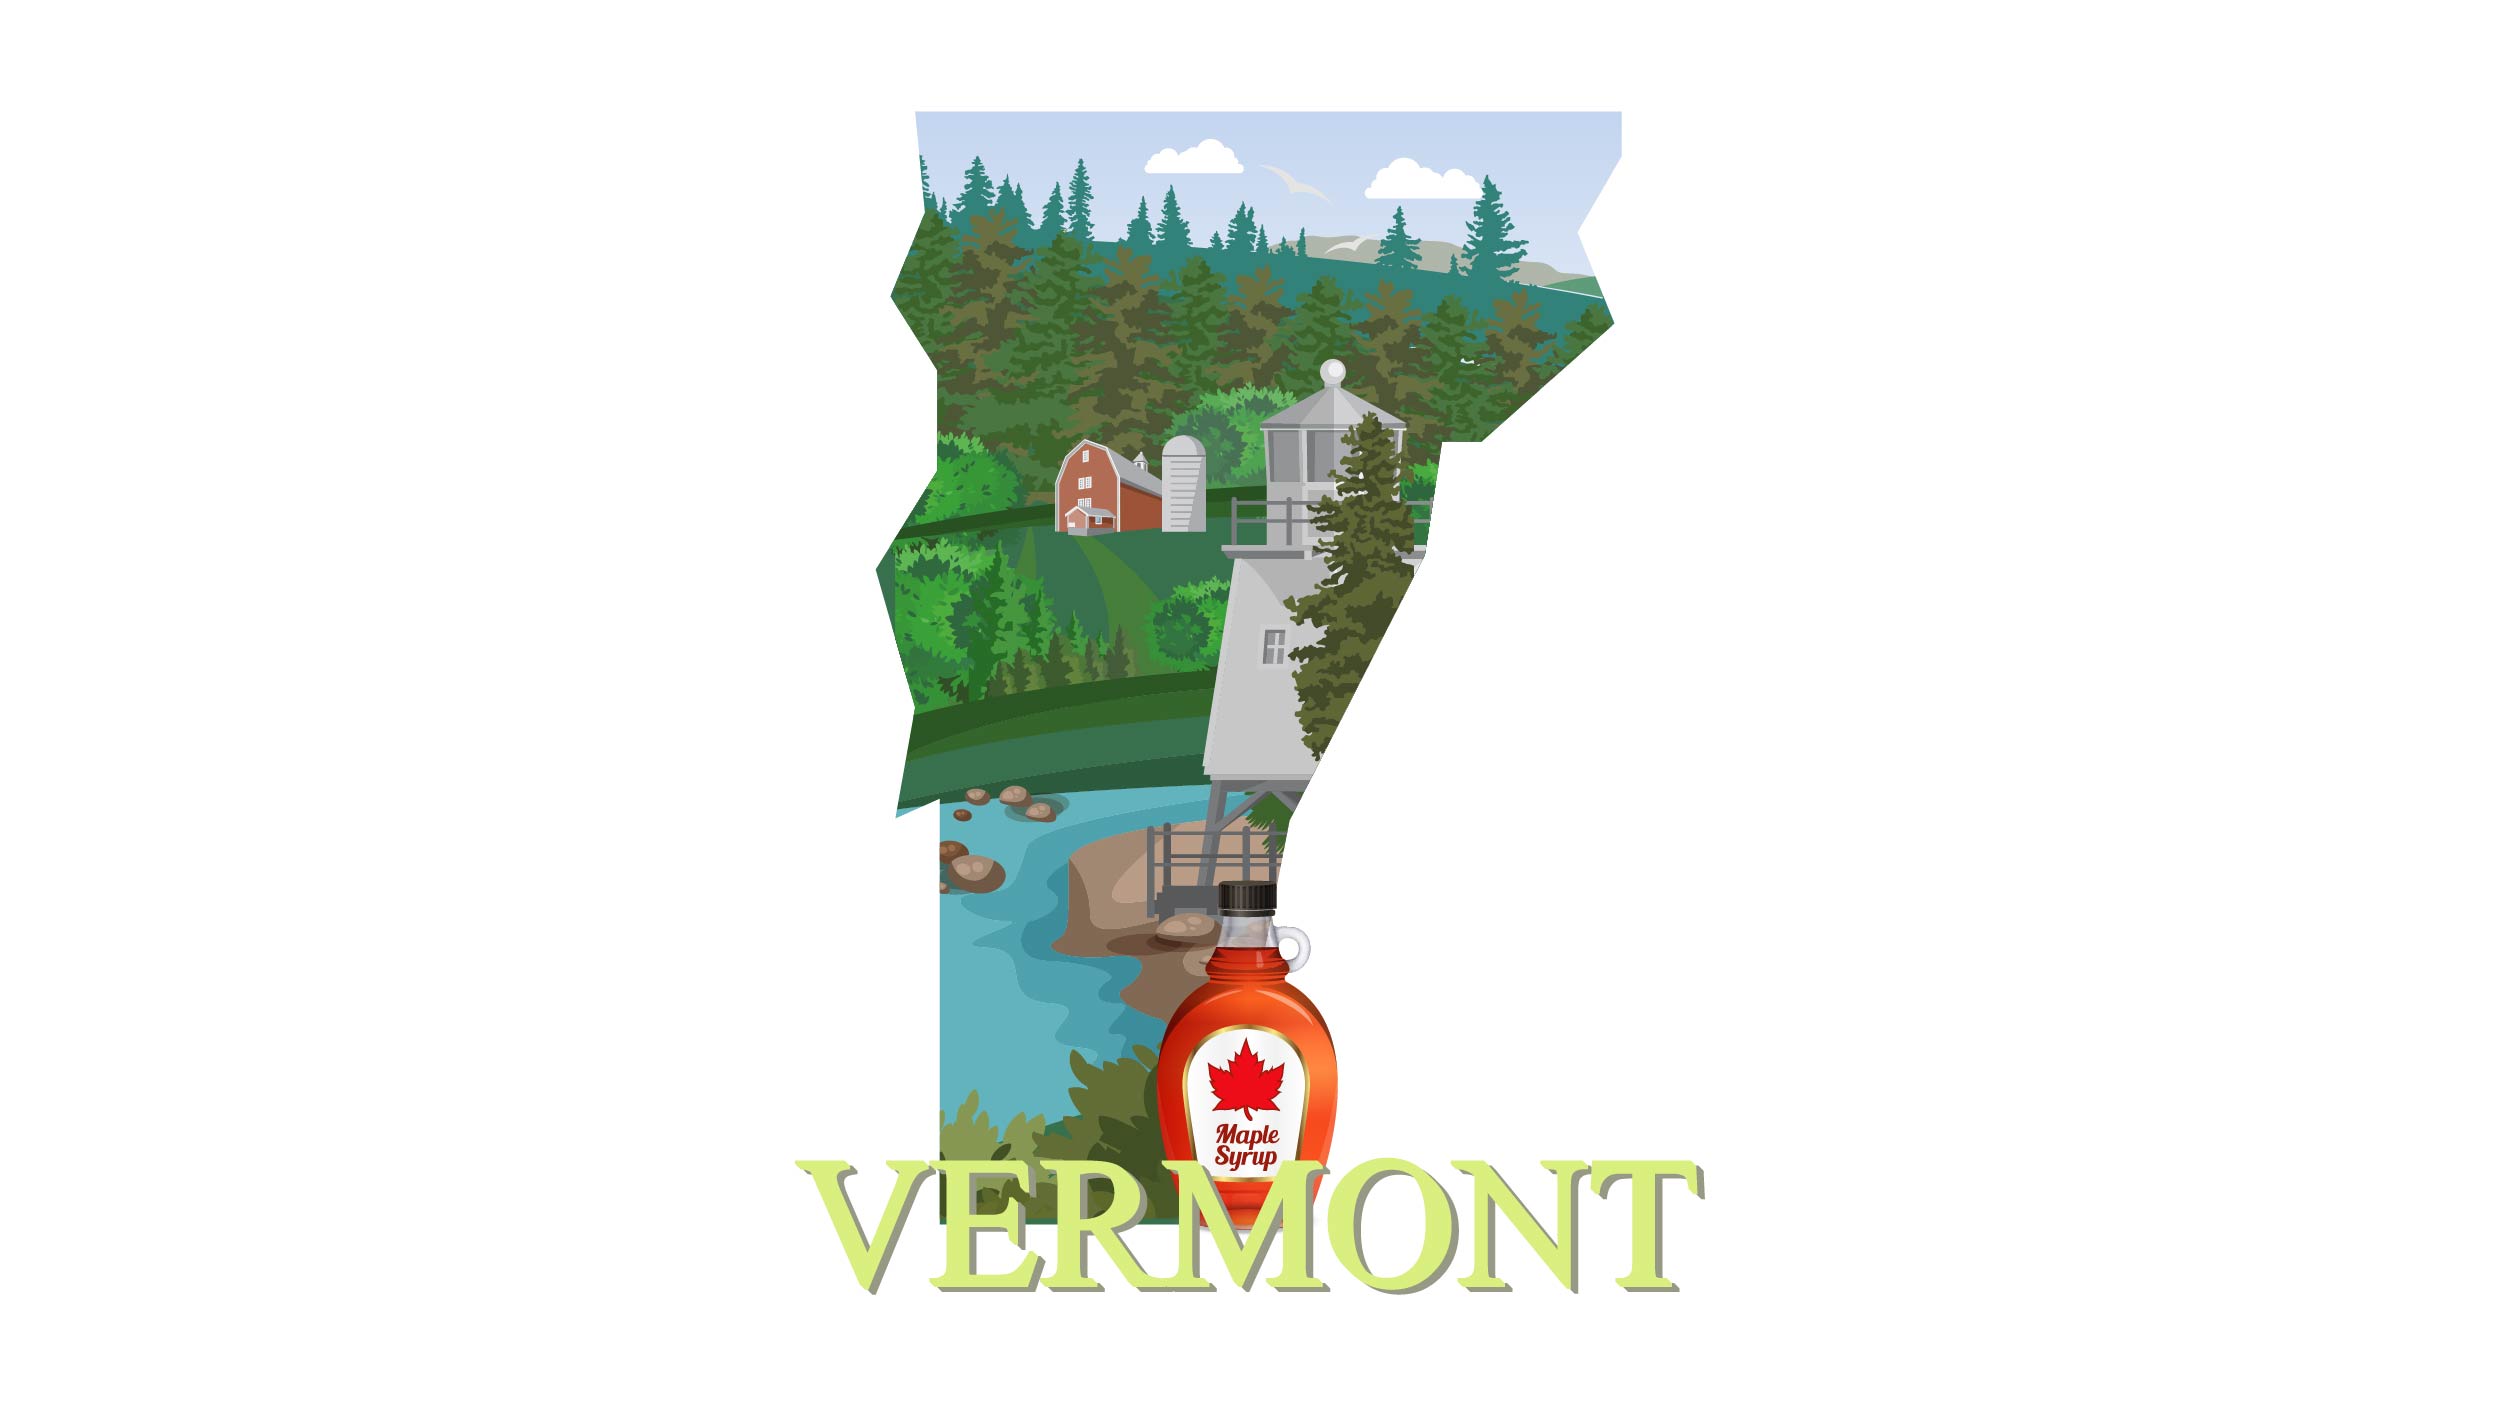 Illustration of Vermont state